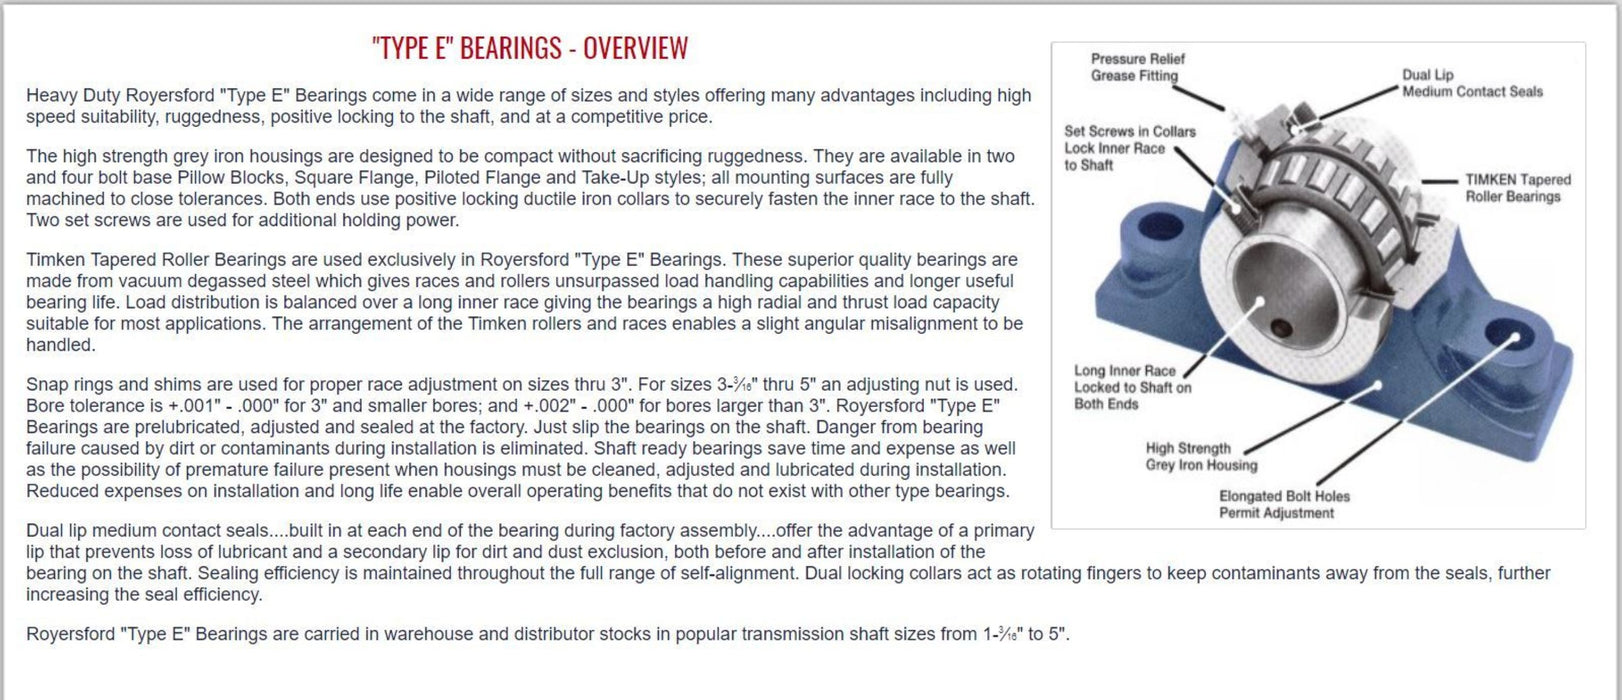 20-02-0110, Royersford TYPE E Pillow Block Bearing, 1-5/8 with Timken Tapered Roller Bearings